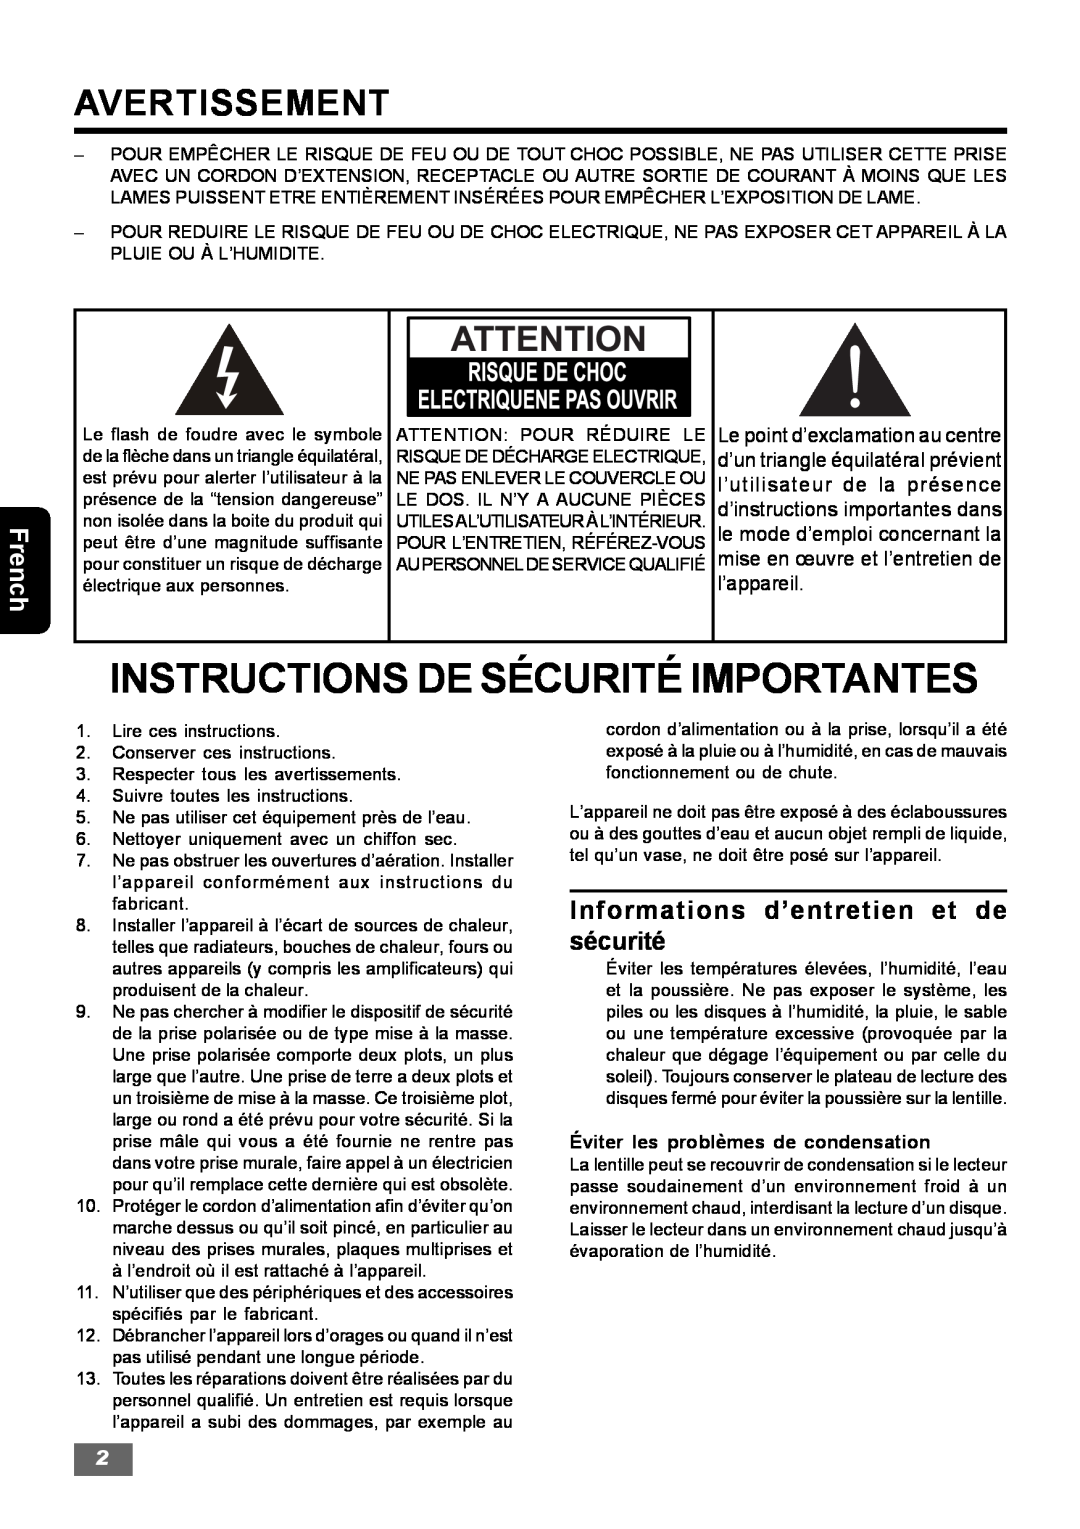 Insignia IS-HTIB102731 owner manual Instructions De Sécurité Importantes, Avertissement, French 